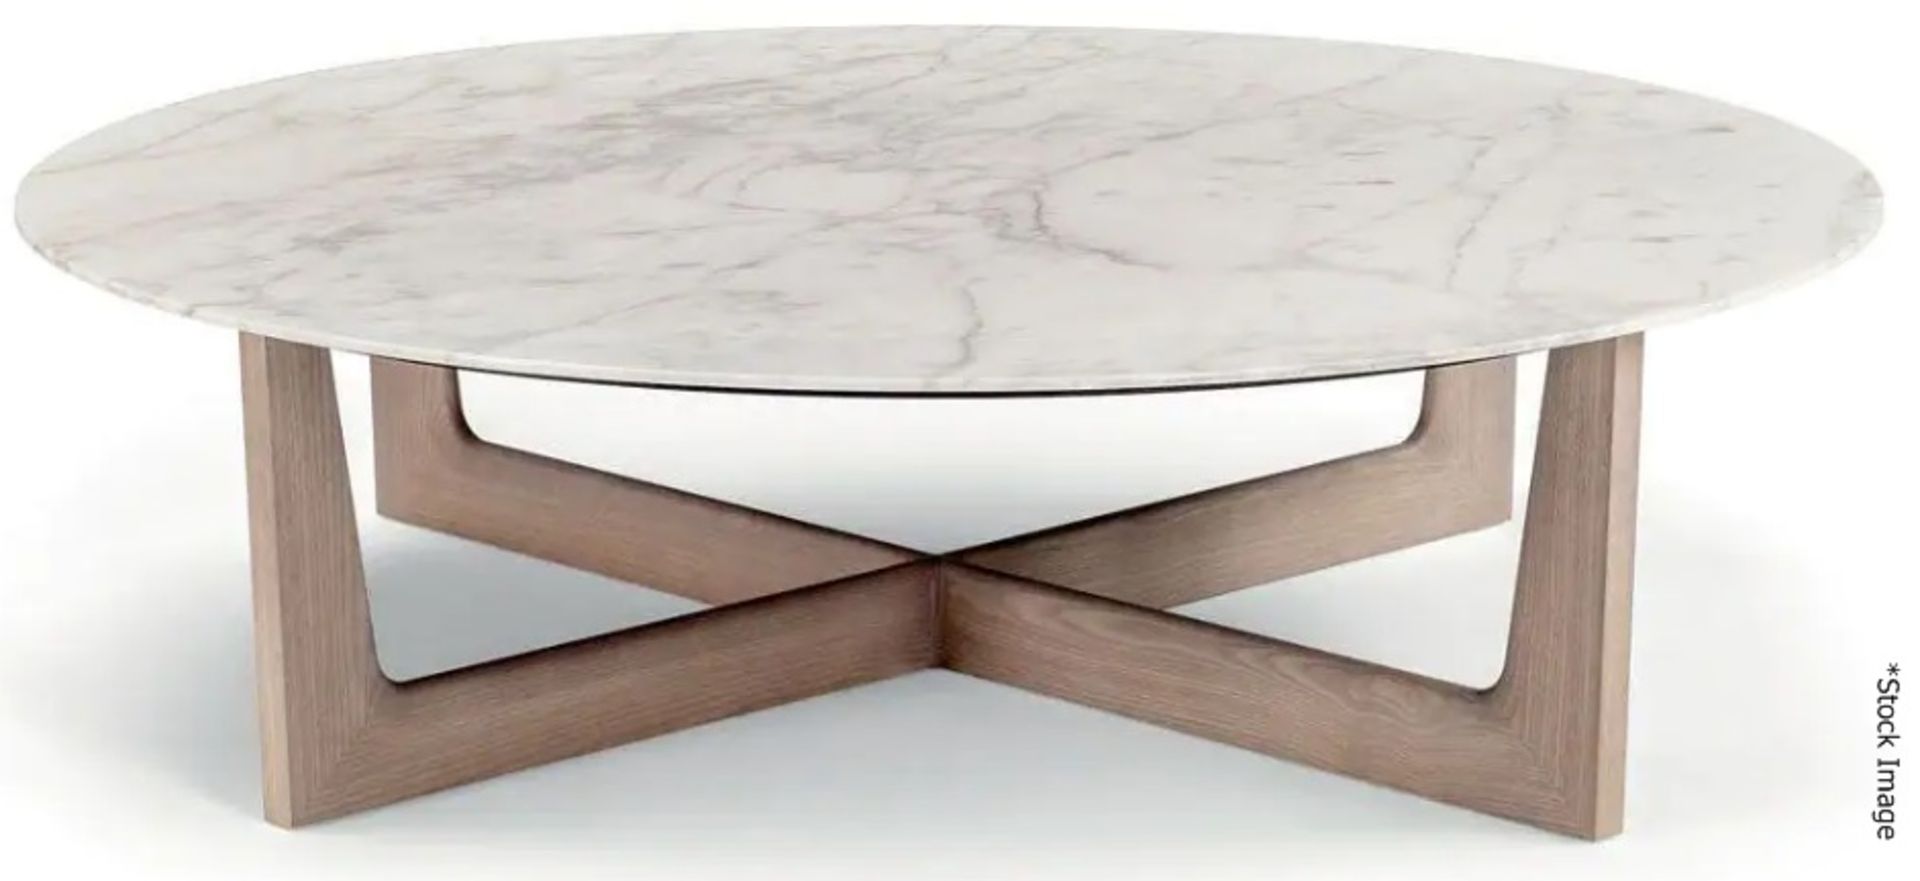 1 x POLTRONA FRAU 'Ilary' Italian Designer Ø110 Marble Coffee Table - Original RRP £2,459 - Ref: